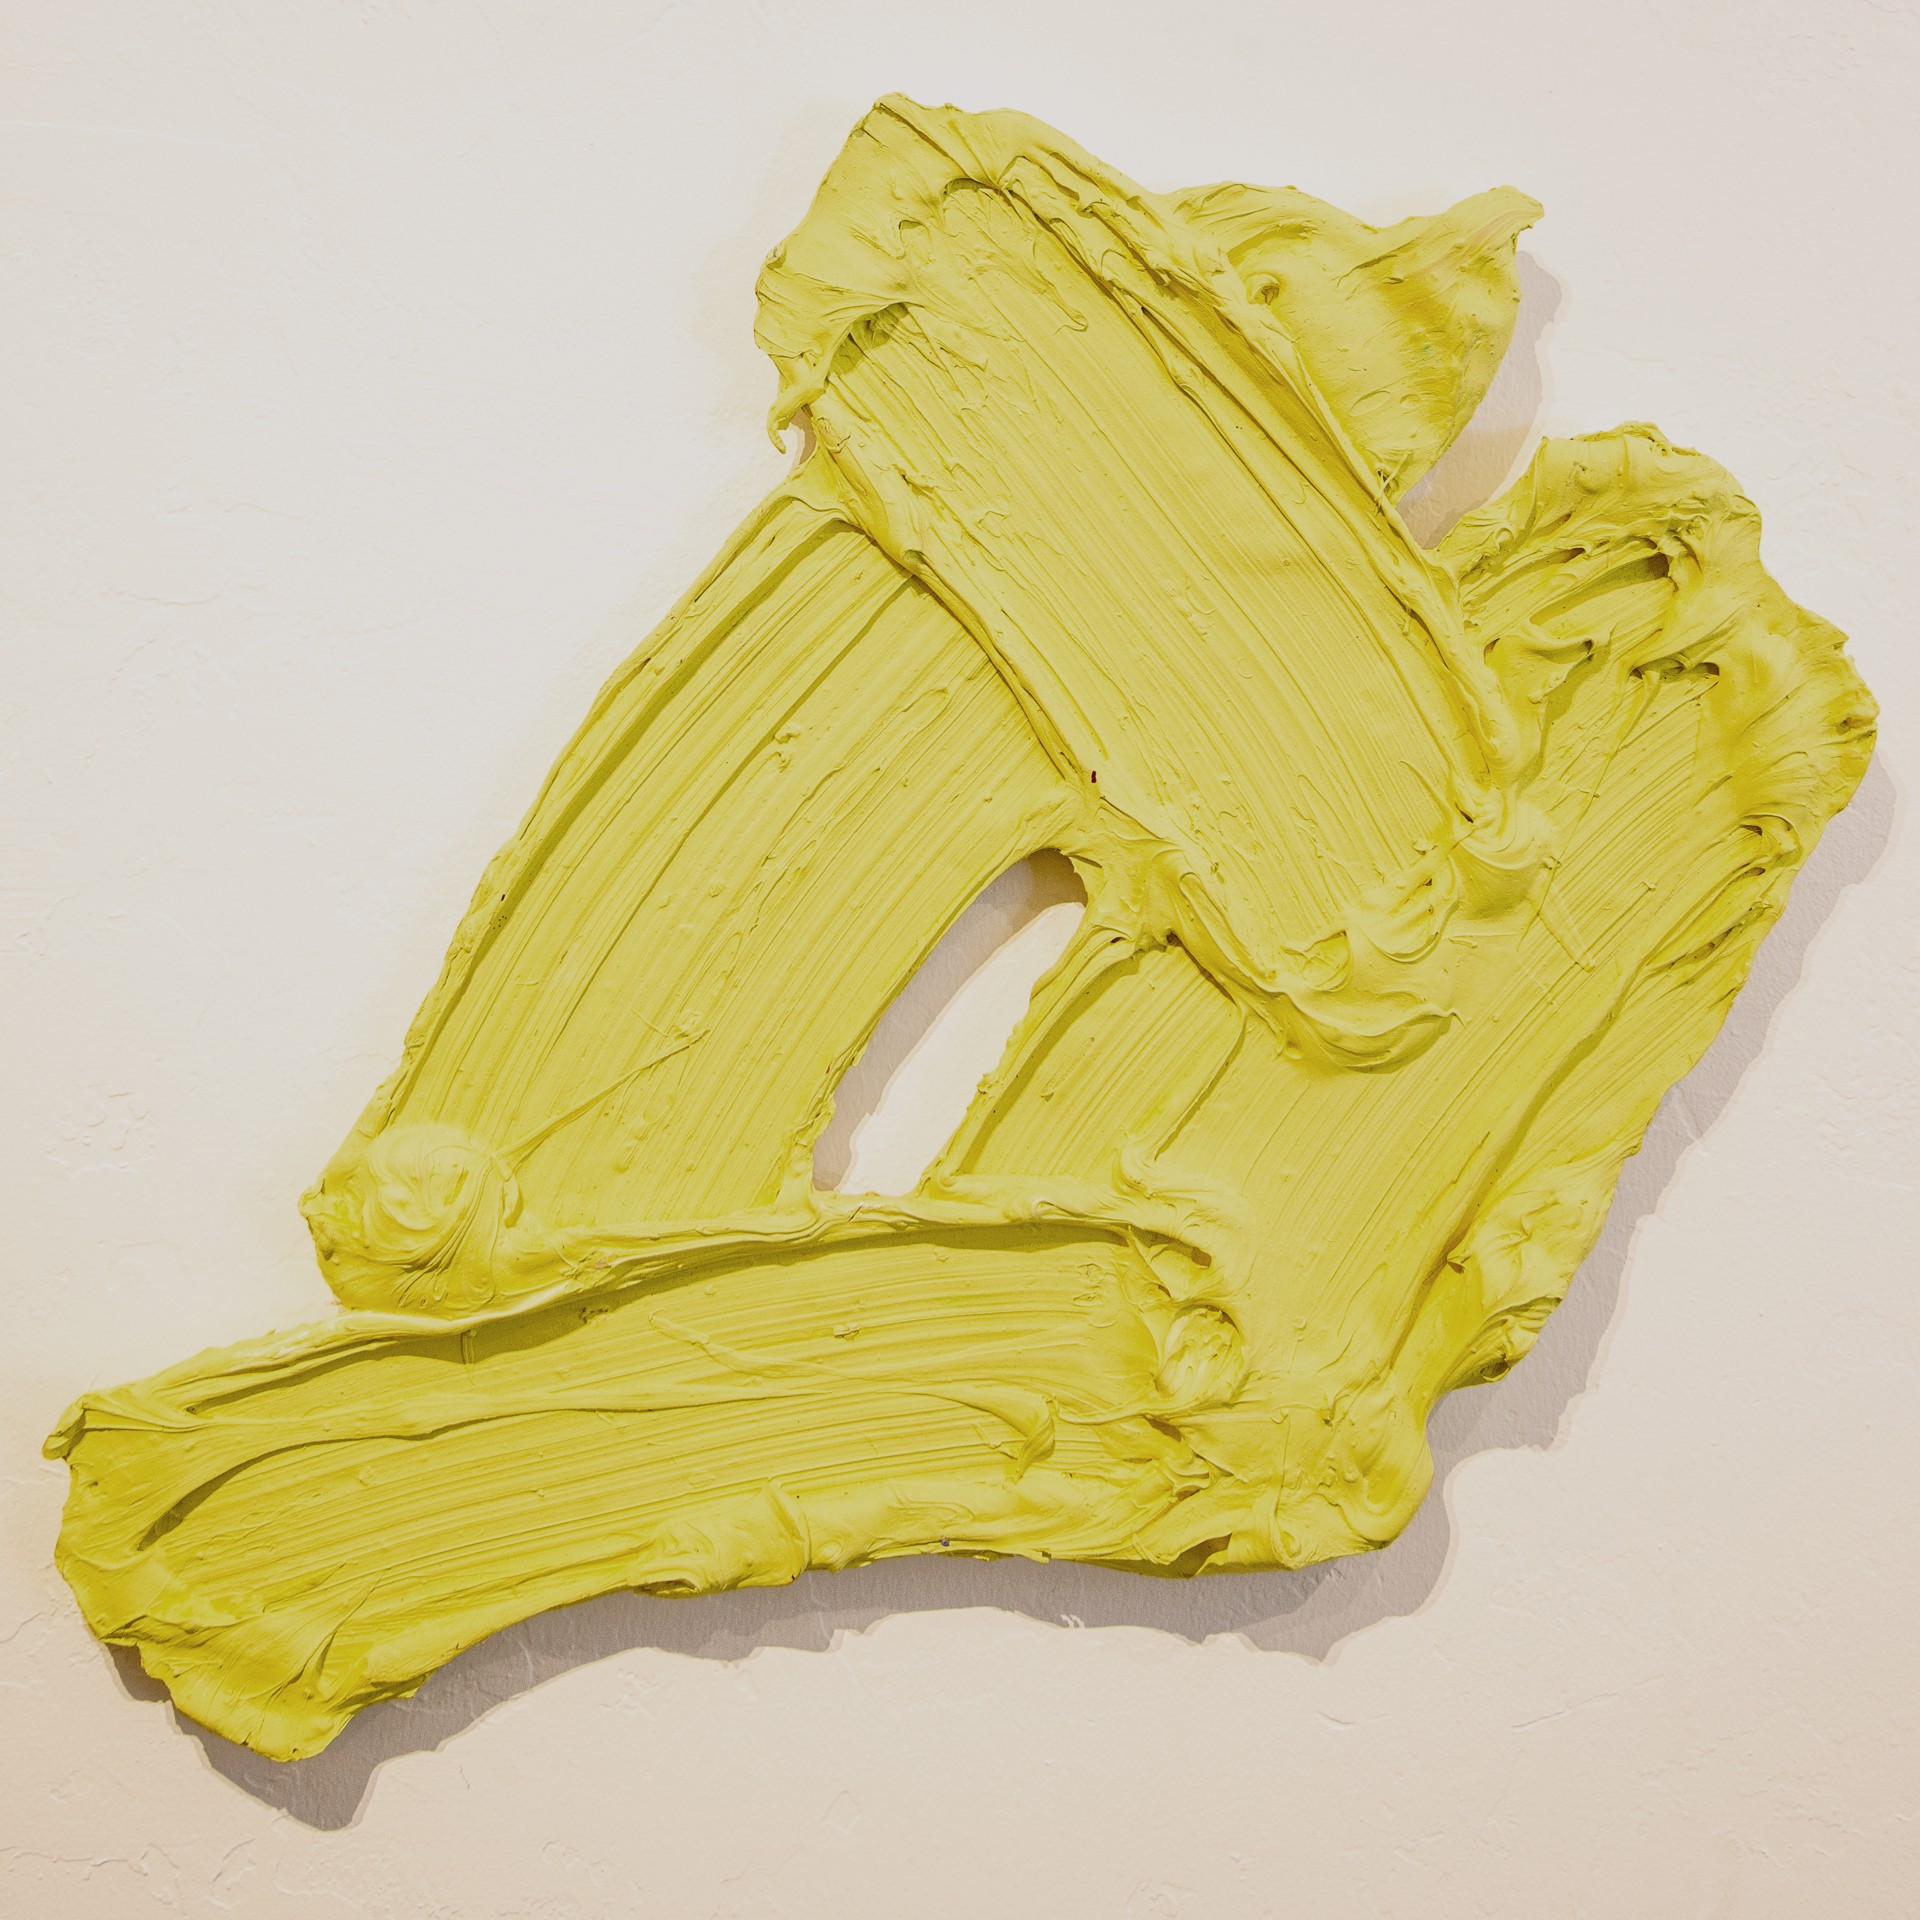 Untitled Study: Pale Yellow by Donald Martiny